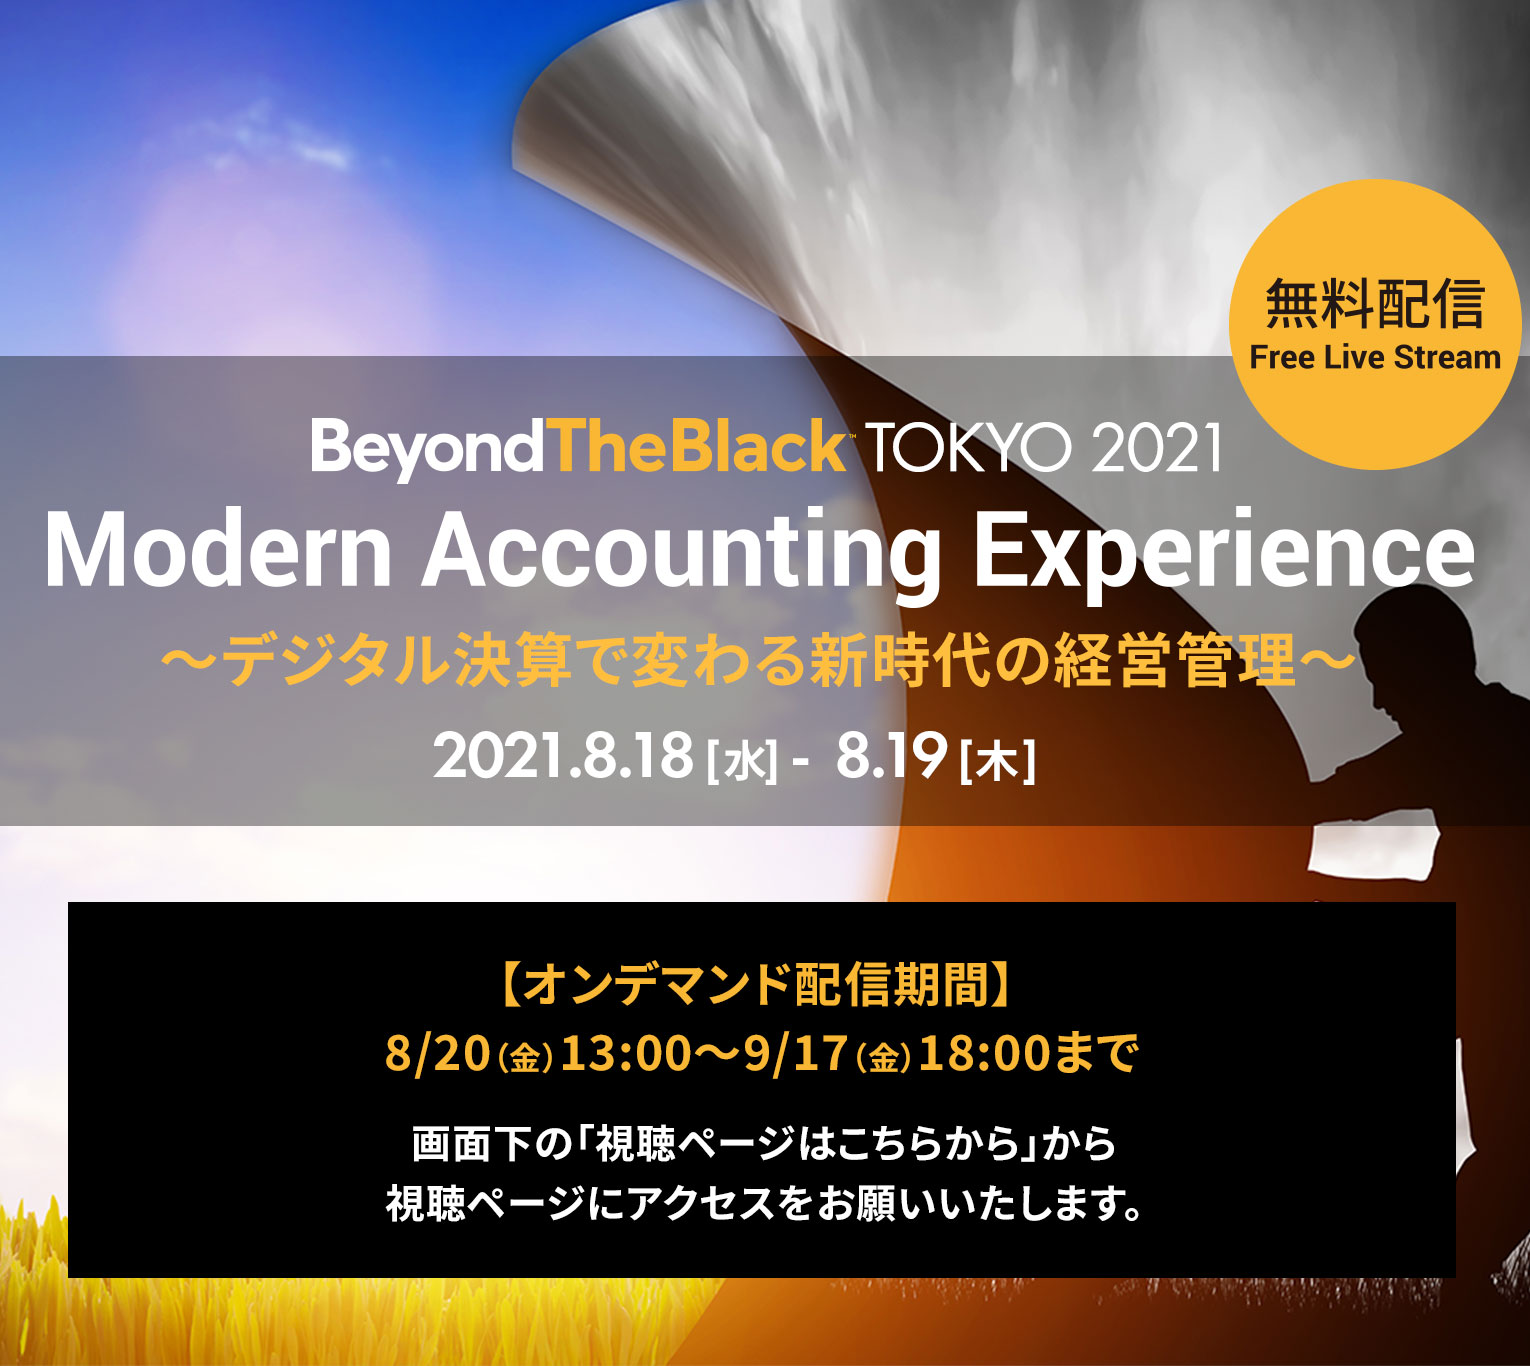 beyond the black TOKYO 2021 modern accounting experience デジタル決算で変わる新時代の経営管理